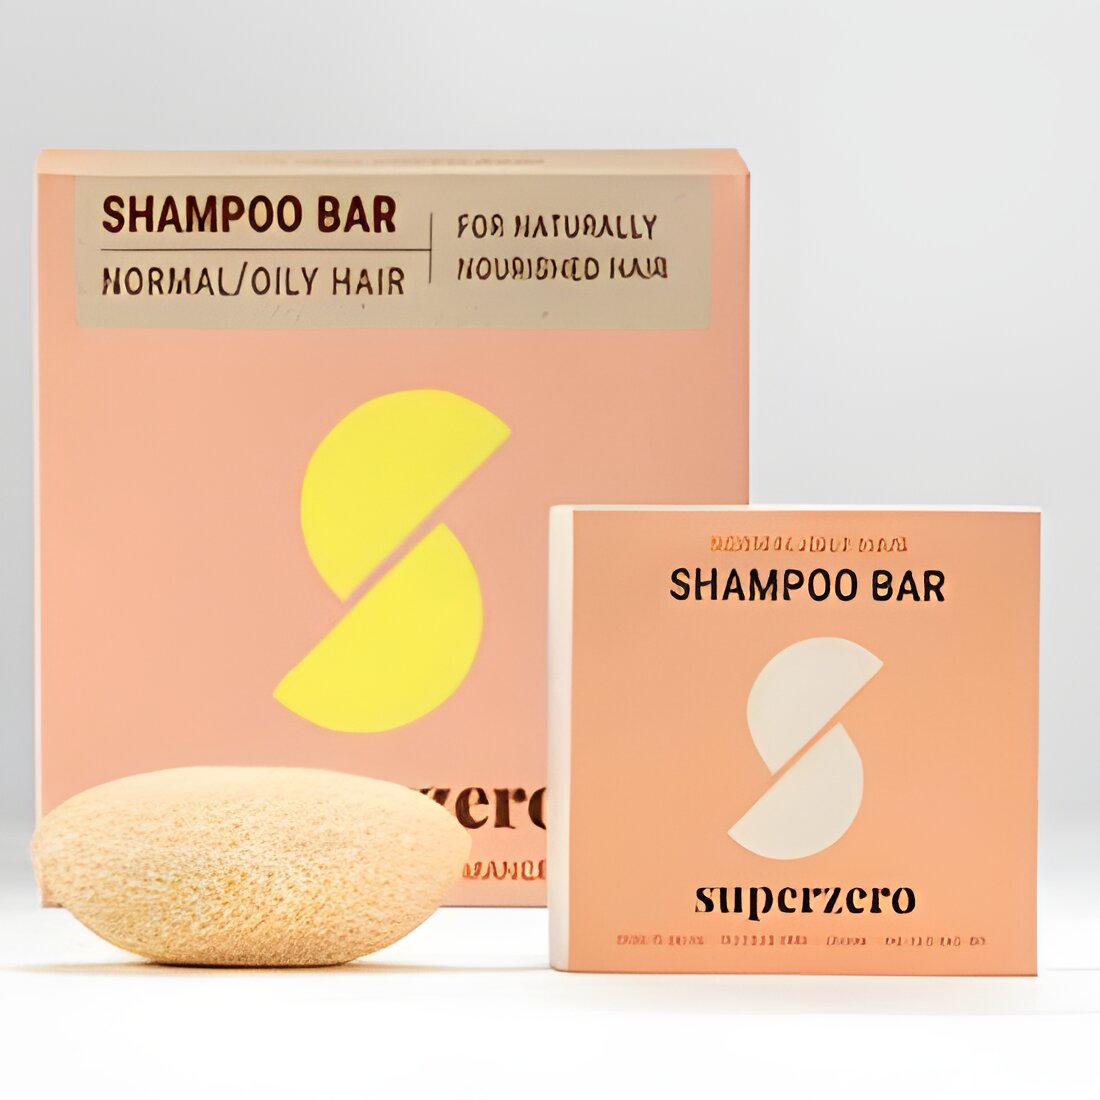 Free Superzero Shampoo Bar for Normal/Oily Hair